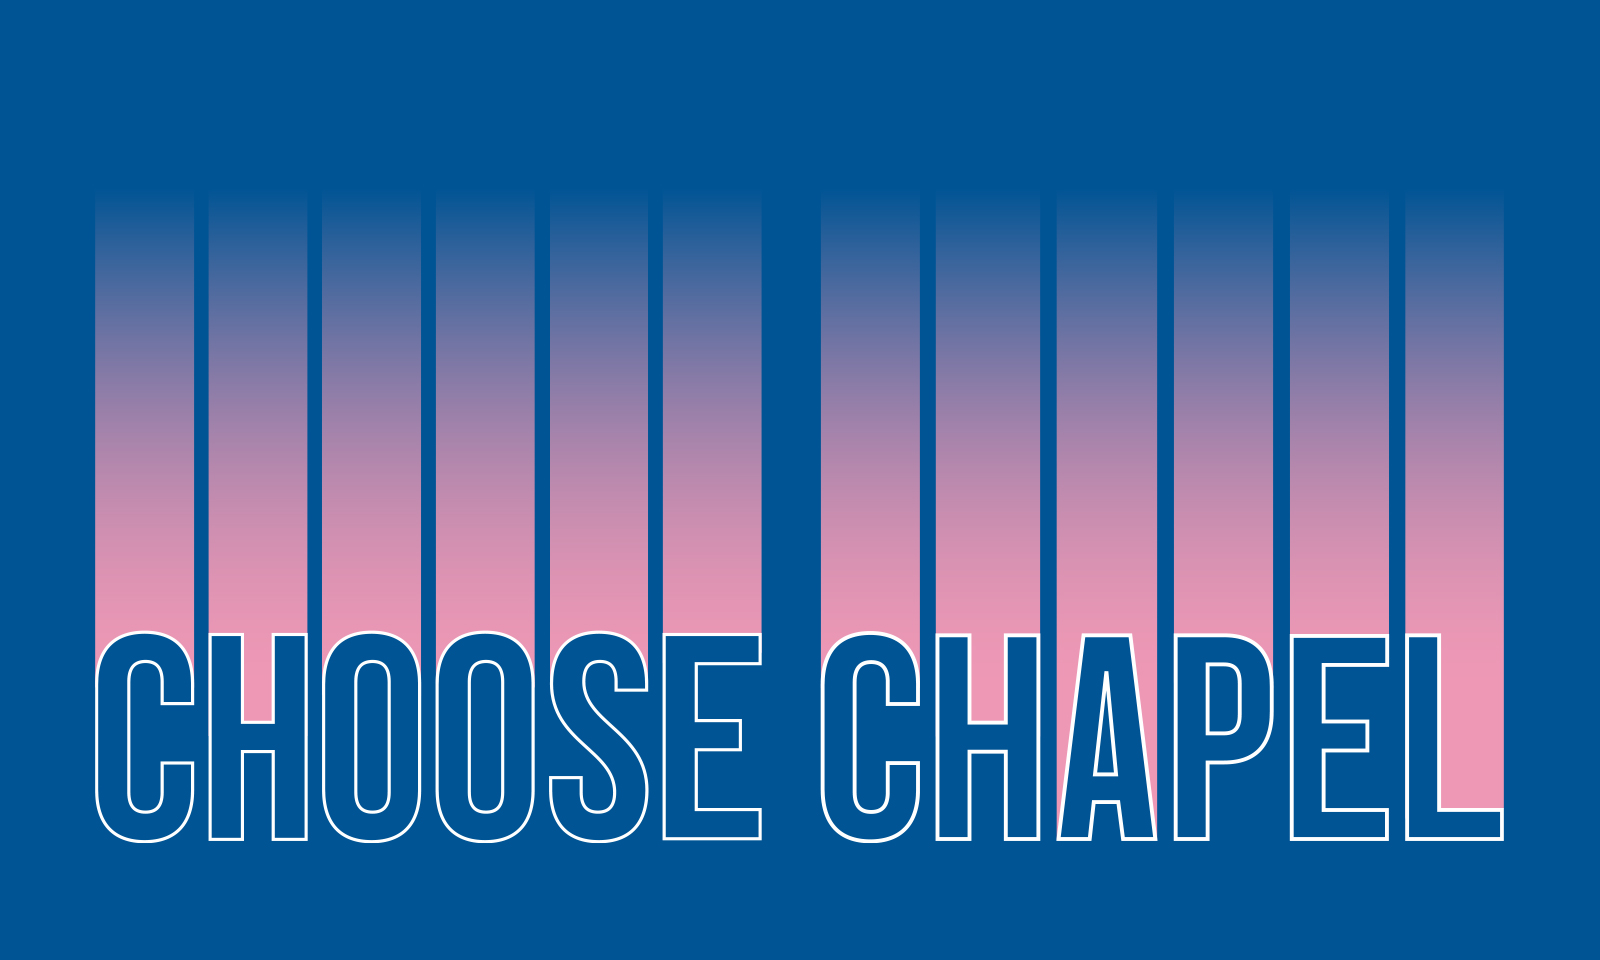 Don’t Choose Boring. Choose Chapel.